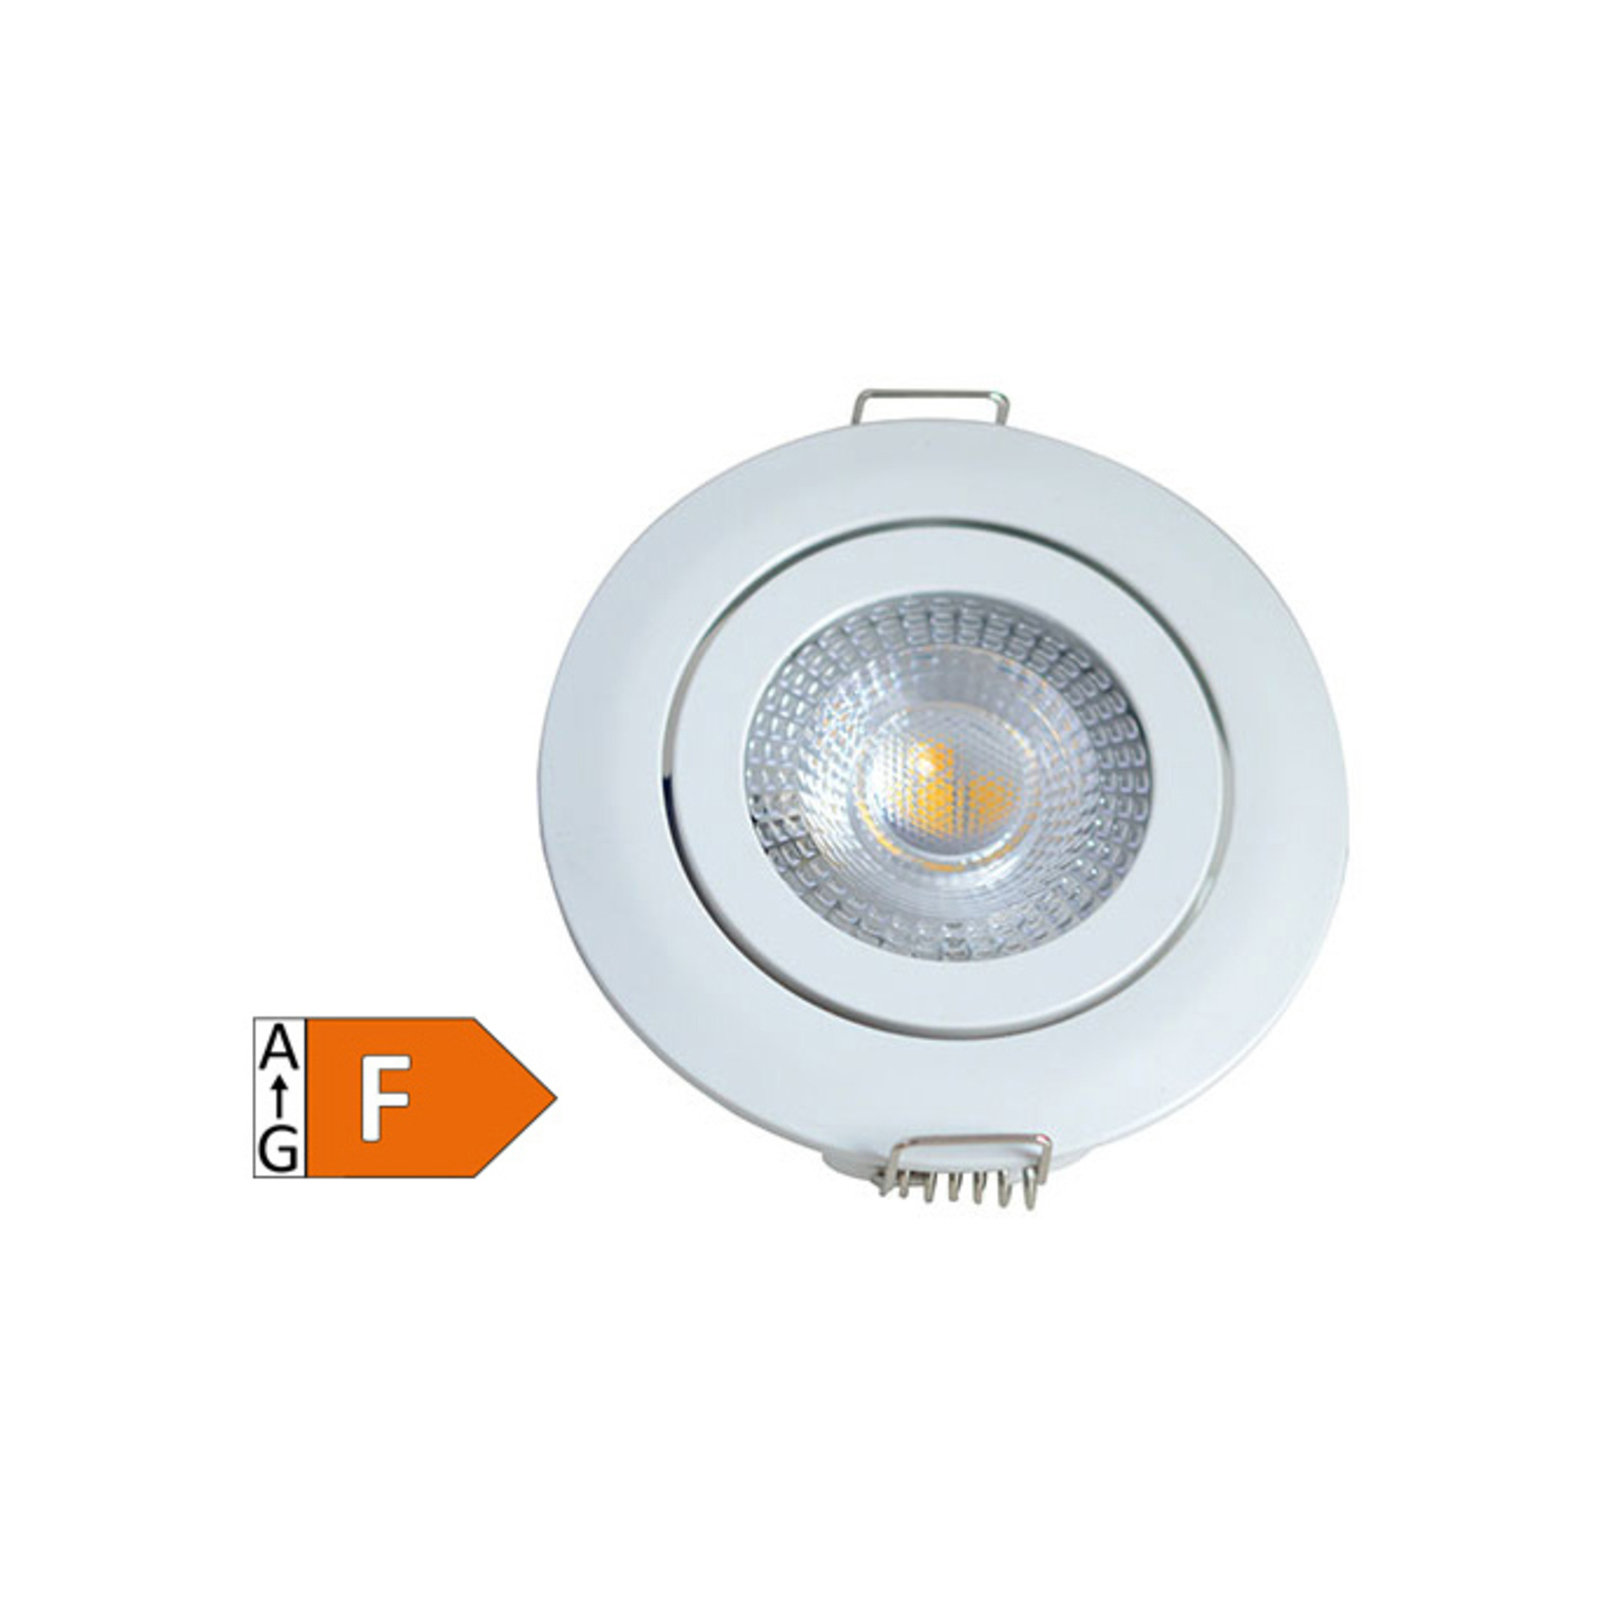 Holstein MS LED recessed light, IP20 40°, white